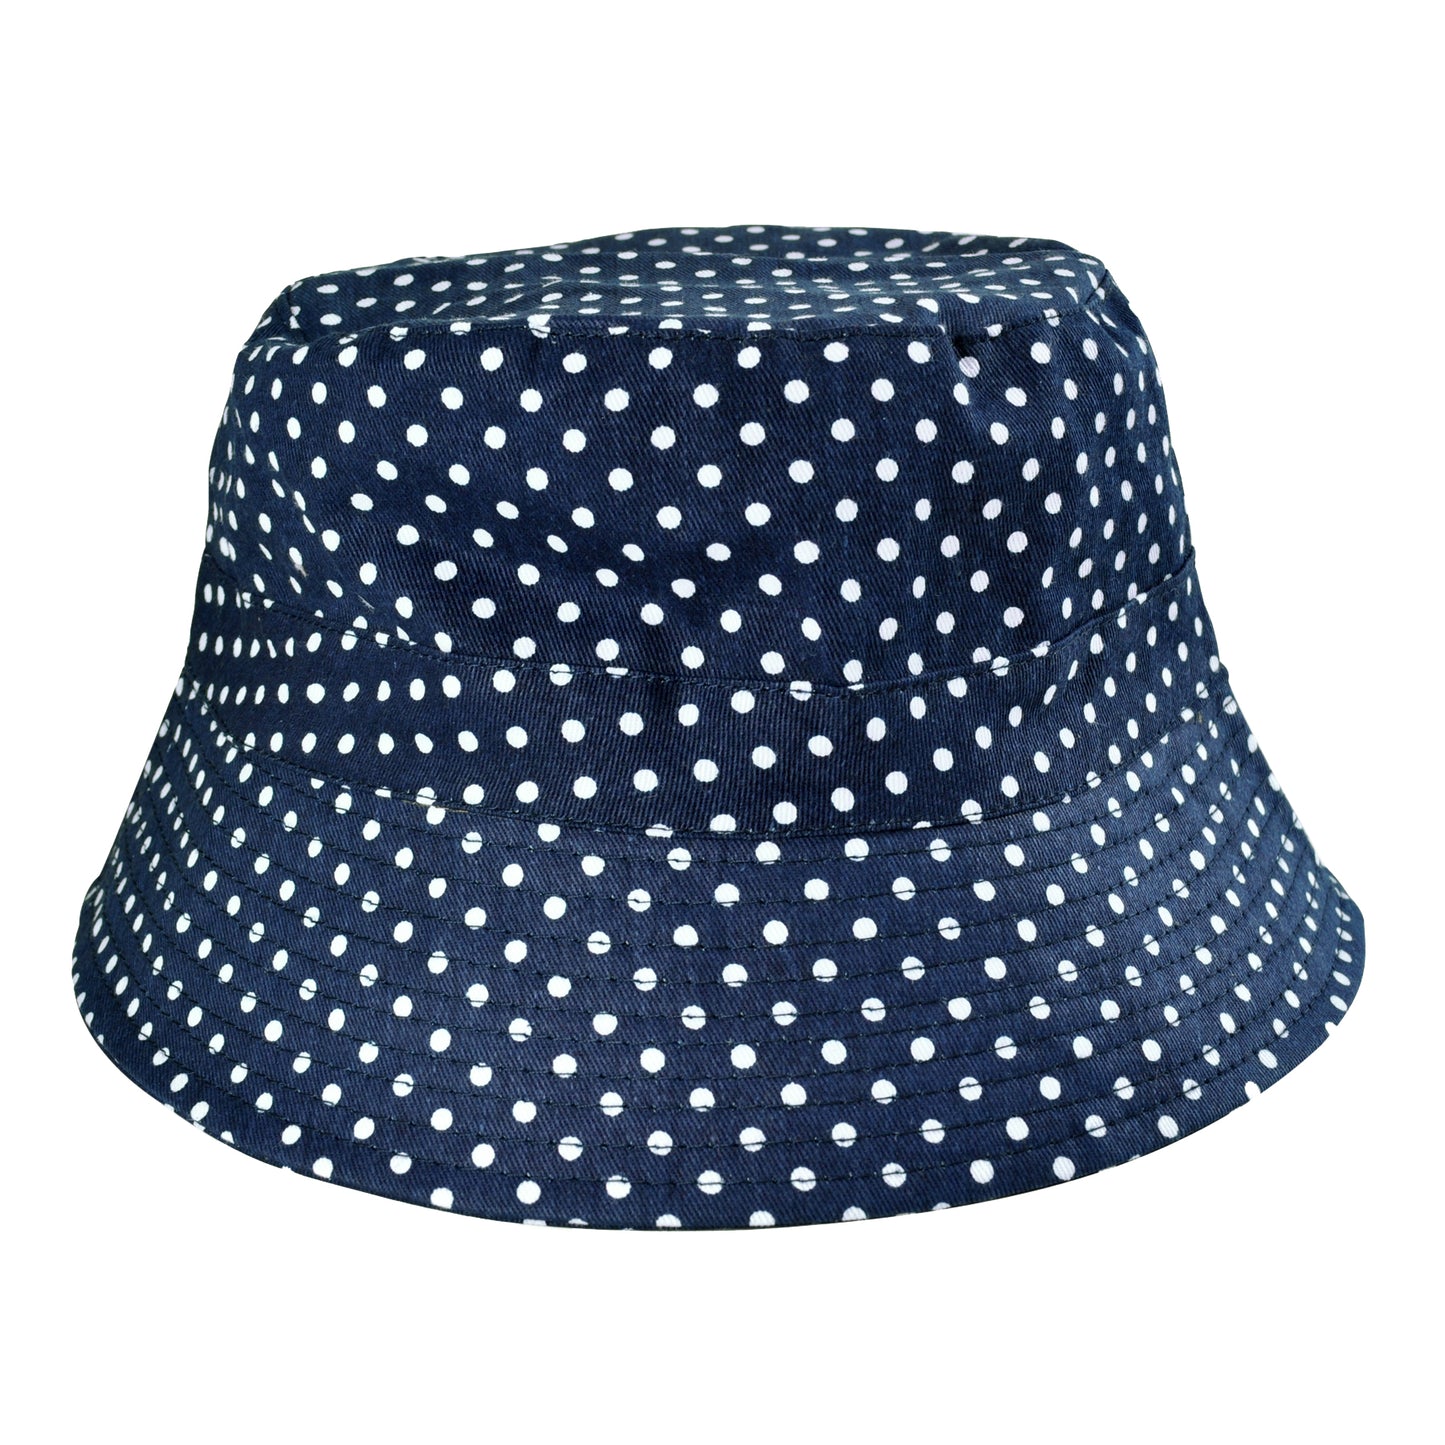 Adult Bucket Hats, 100% Cotton Packable